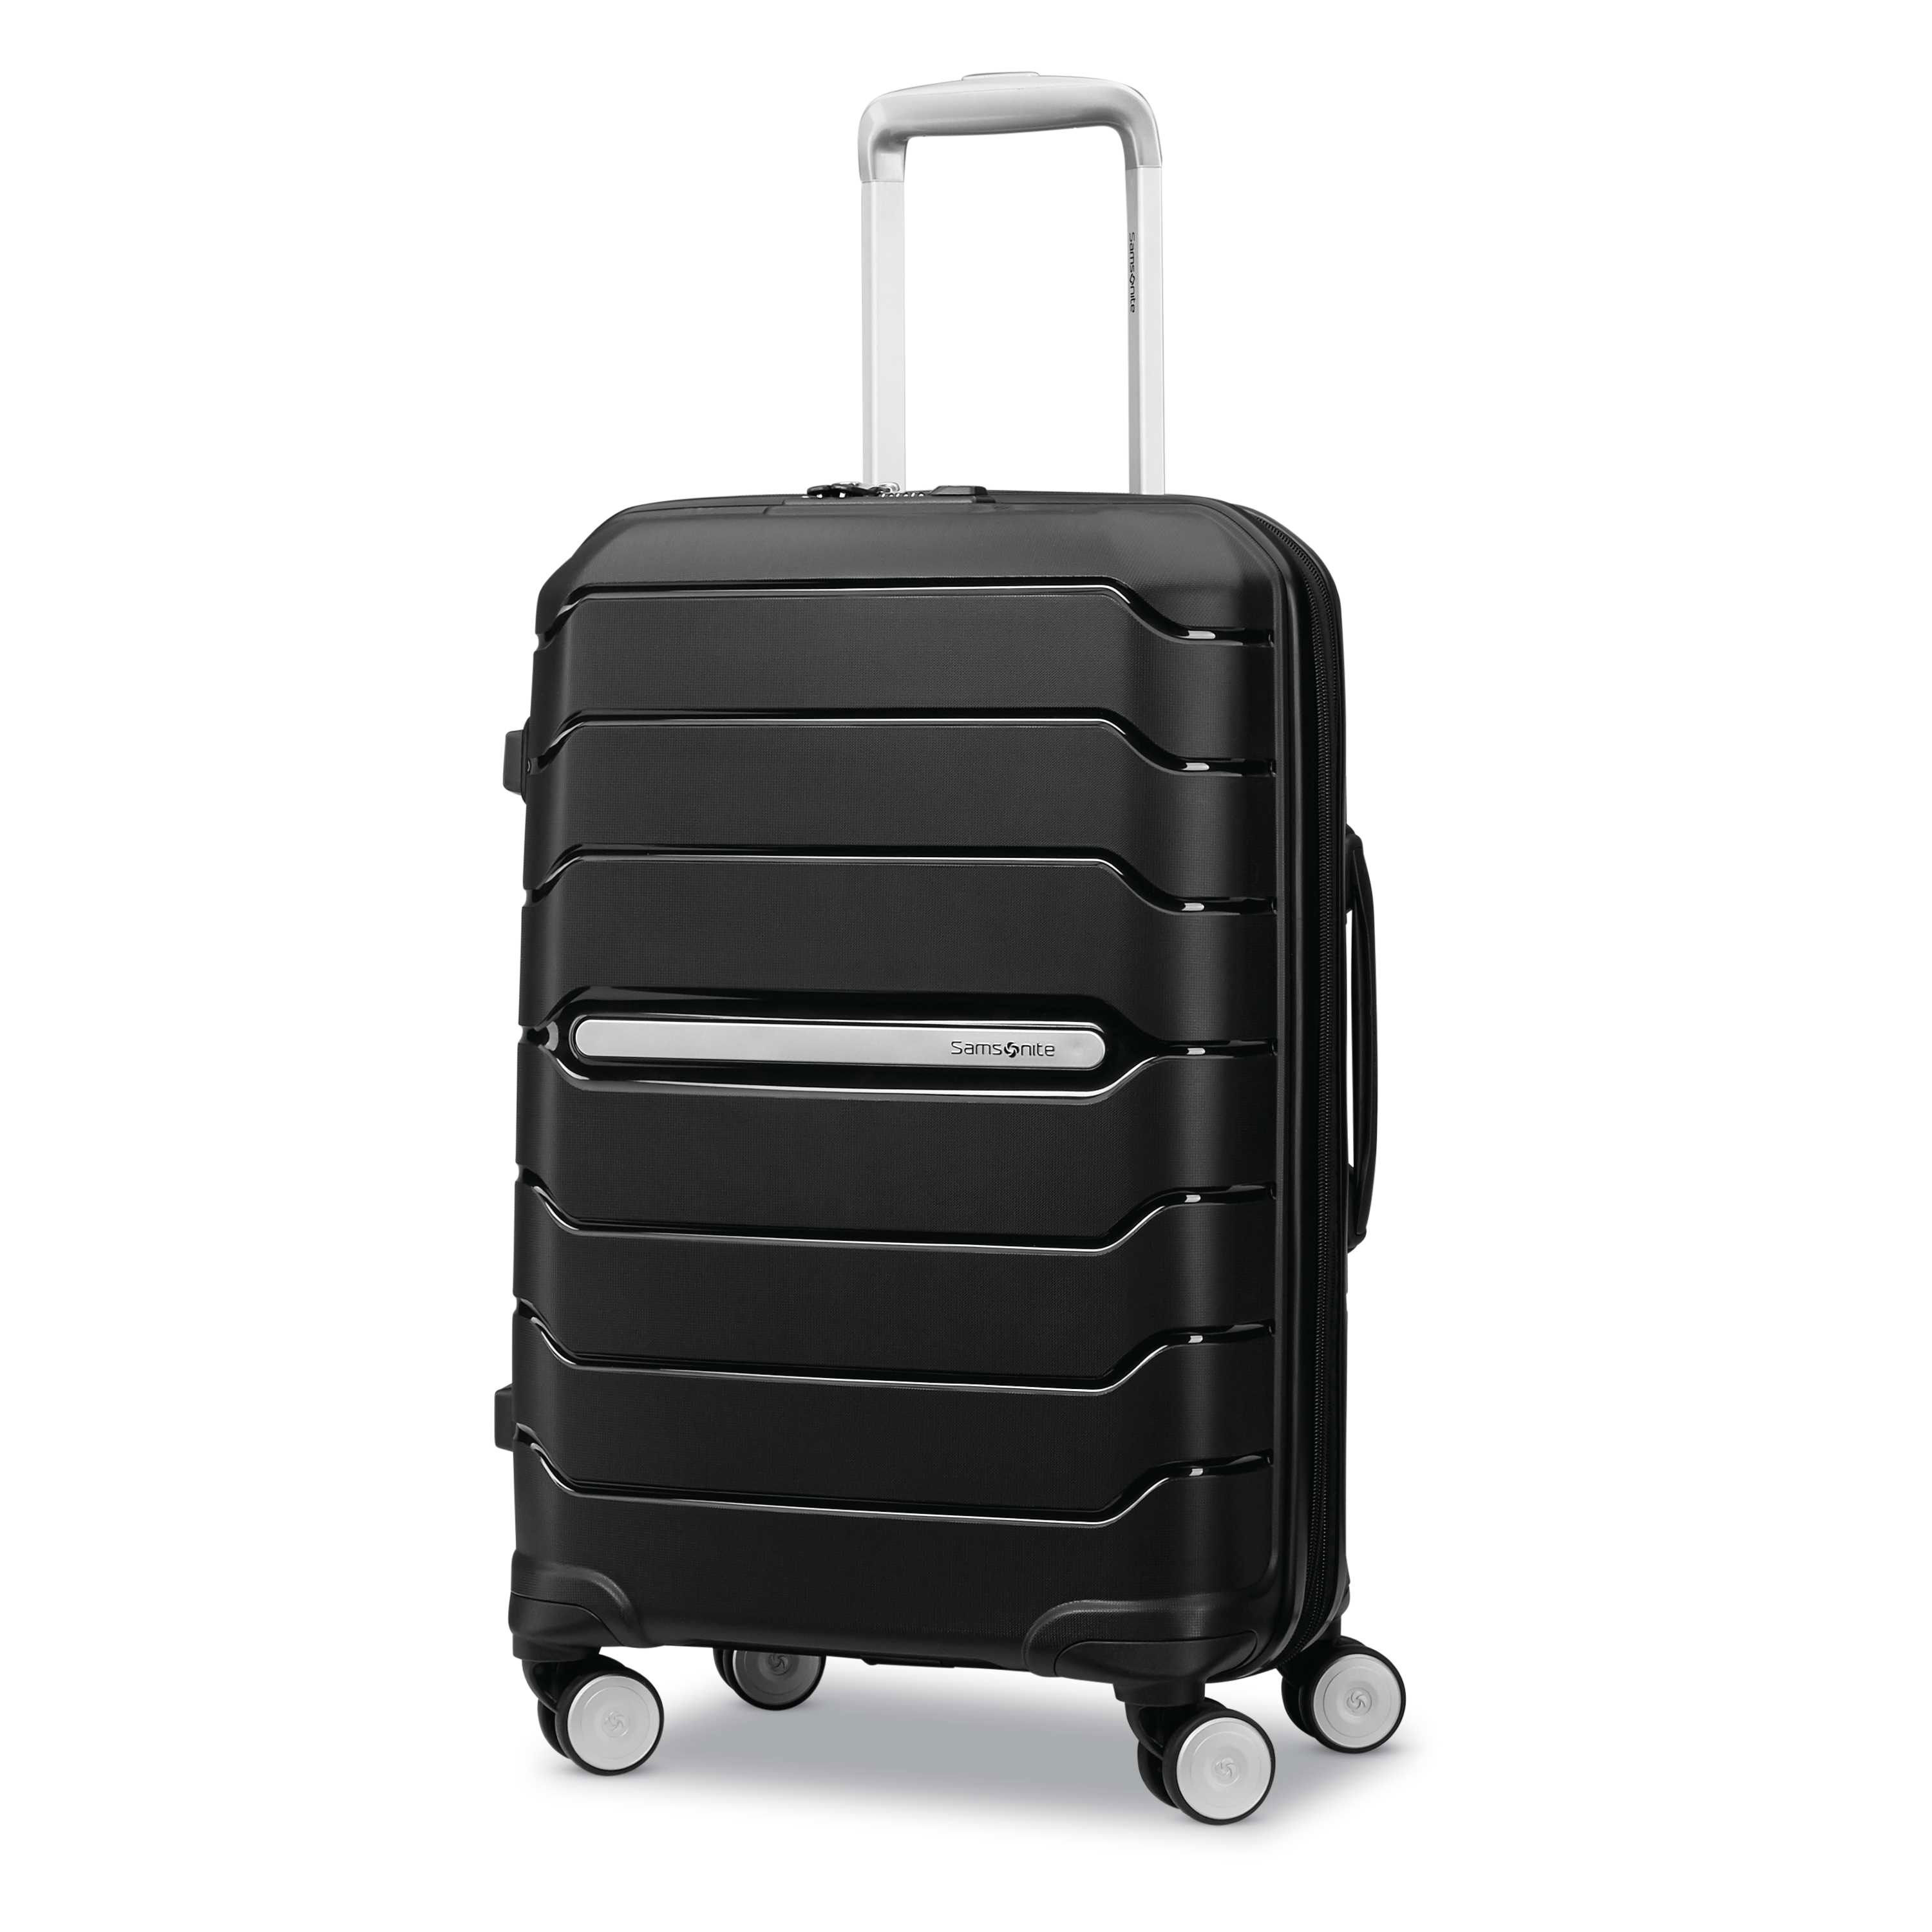 Best Samsonite deal: Get 20% off best-selling luggage through Jan. 31 |  Mashable